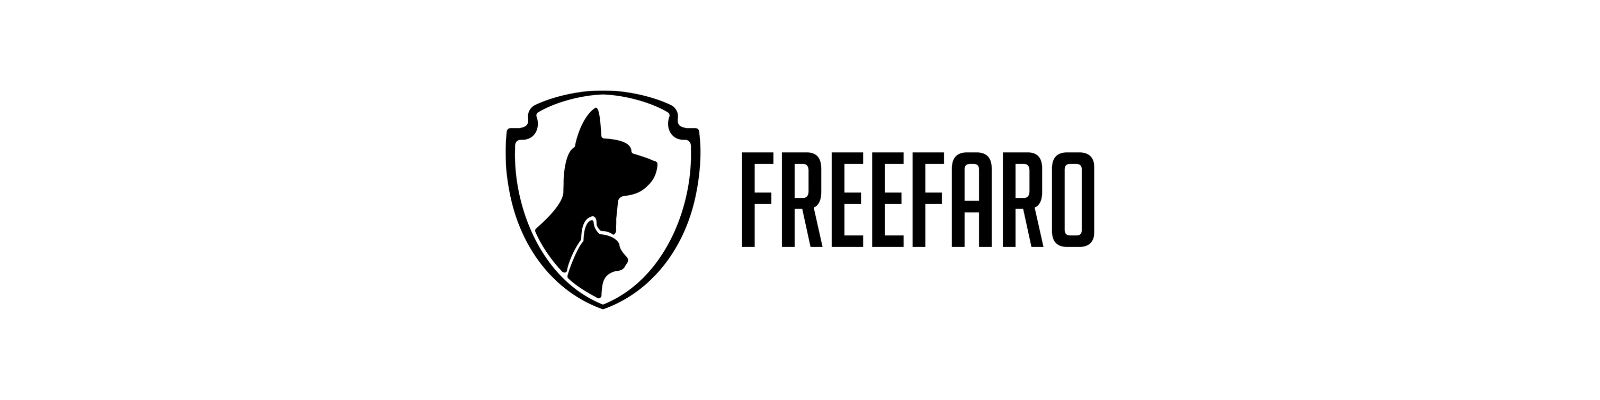 WhatsApp FreeFaro: Telefones e Canais de atendimento!